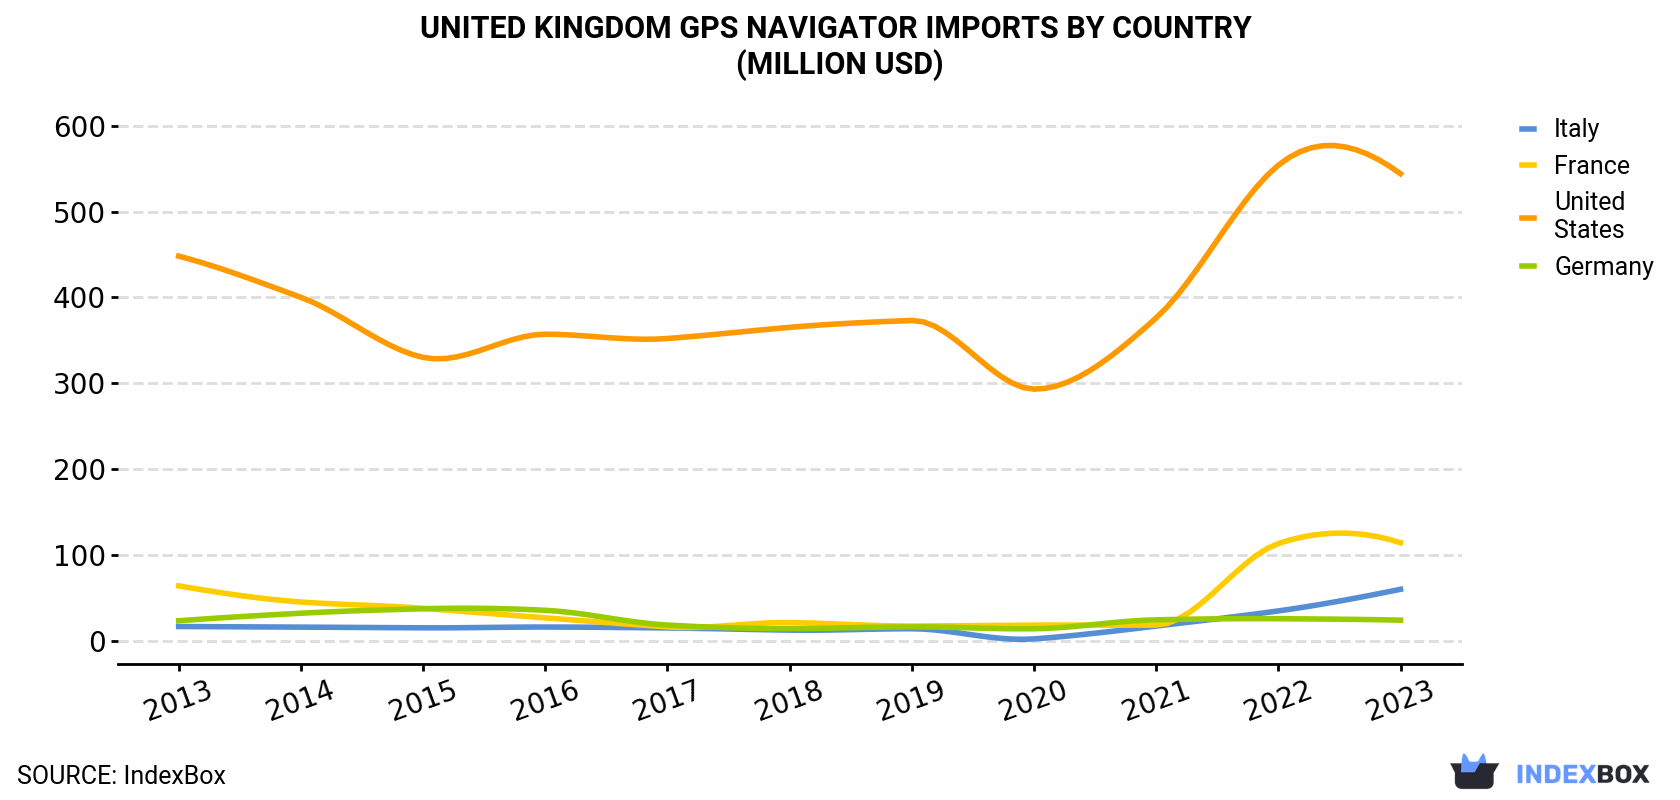 United Kingdom GPS Navigator Imports By Country (Million USD)